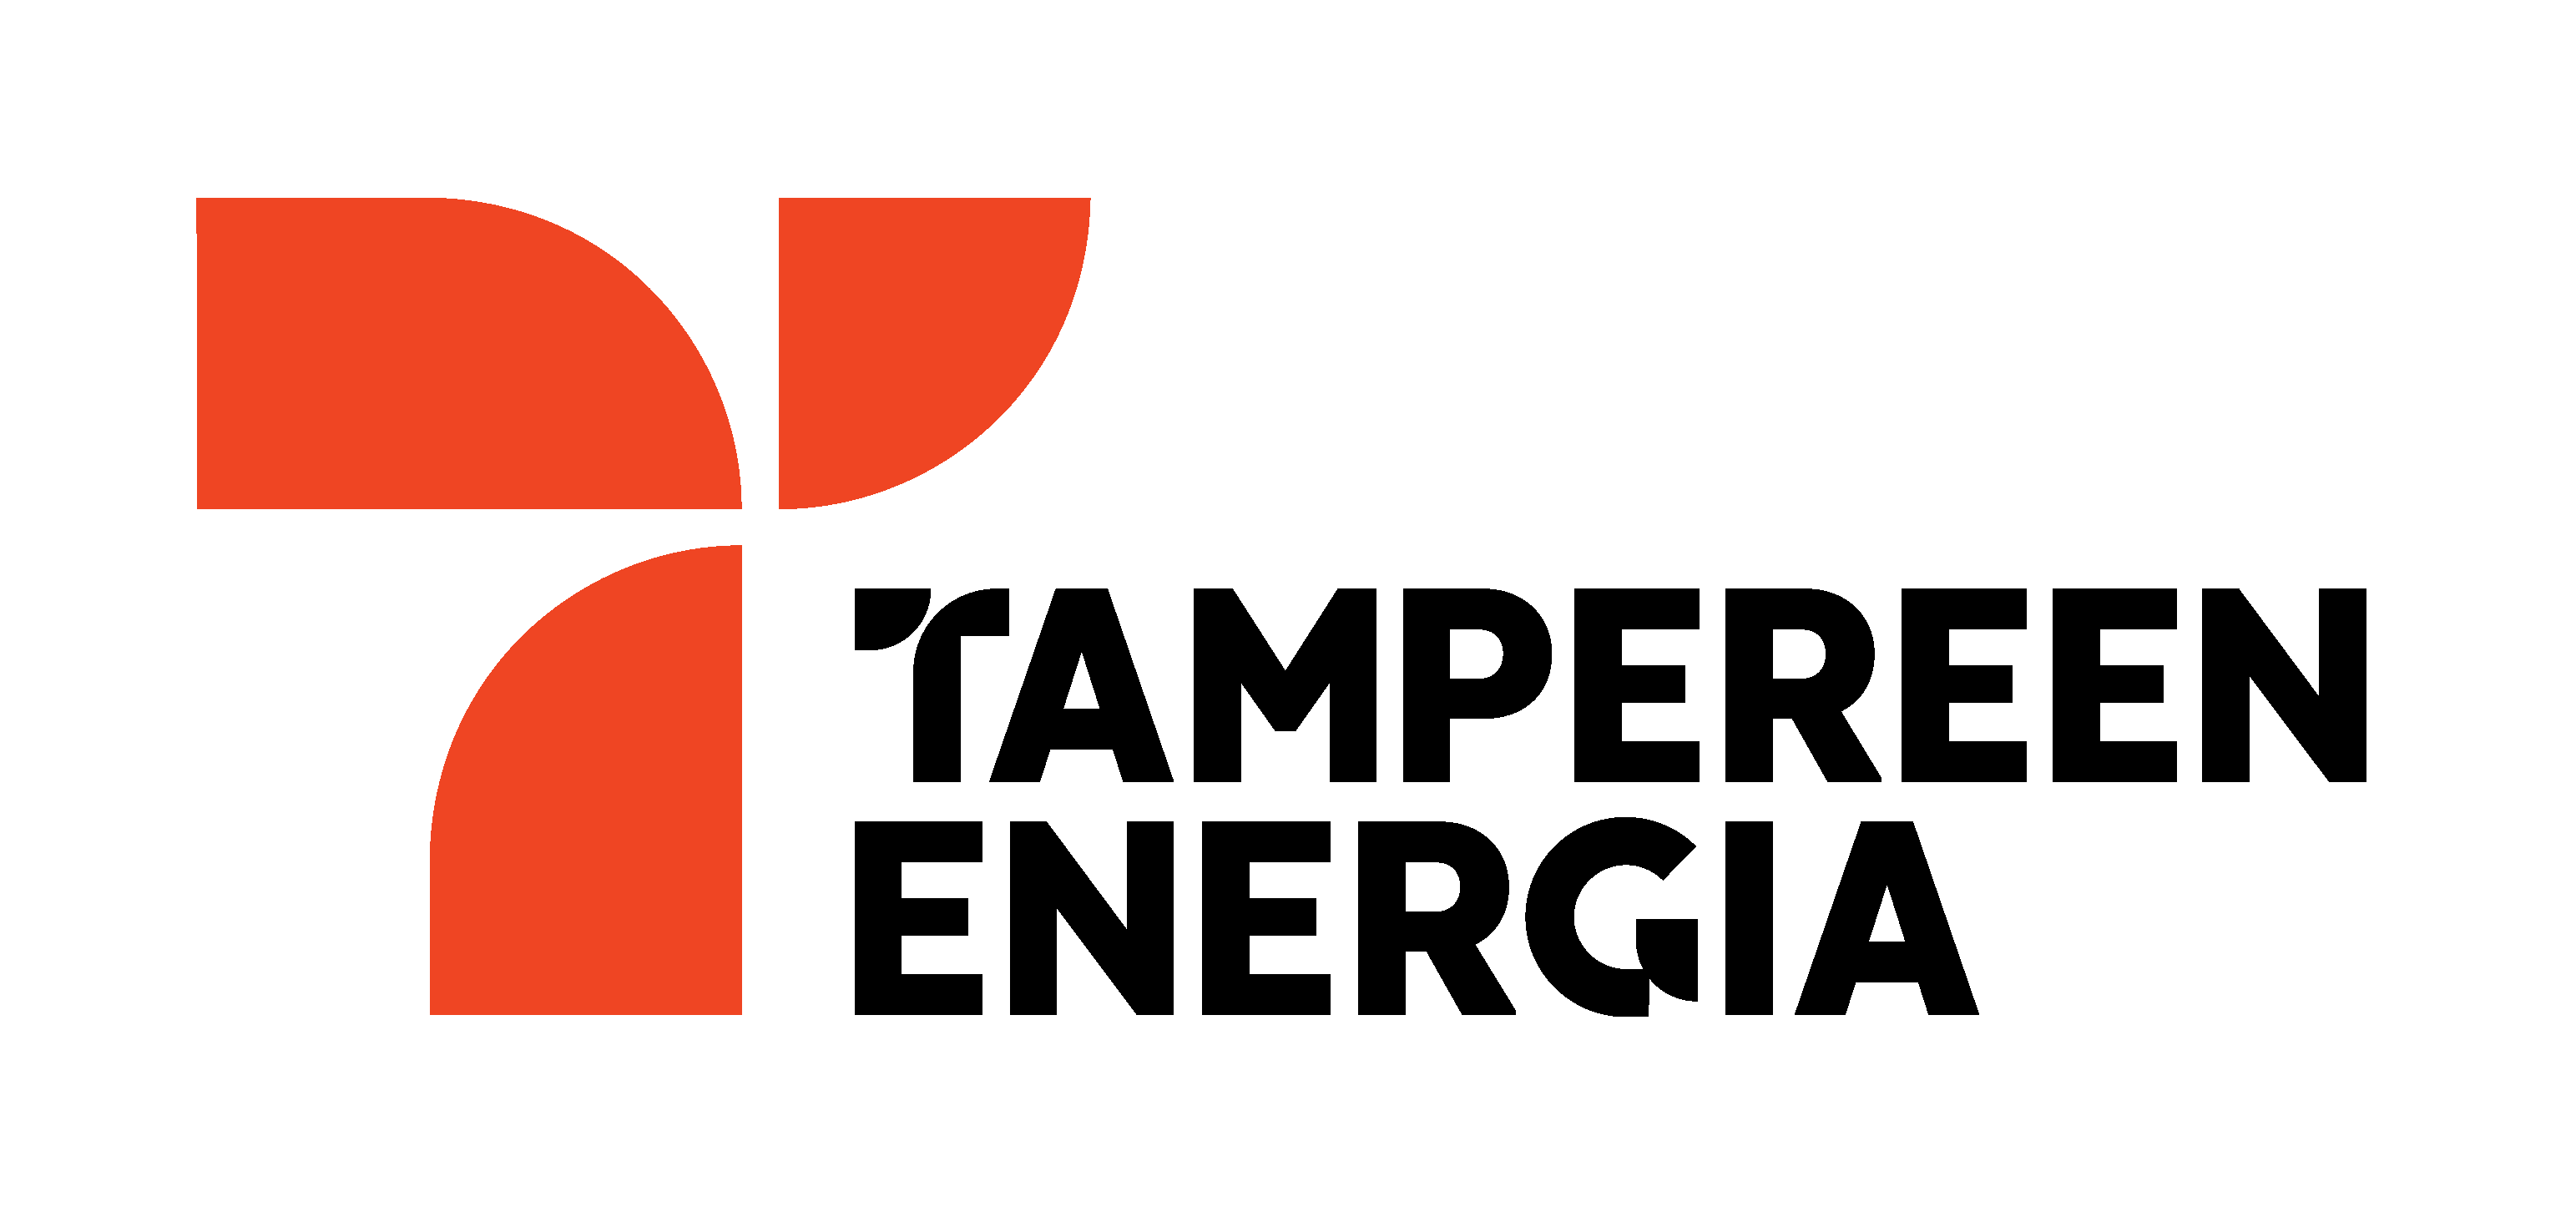 Tampereen Energia Oy logo